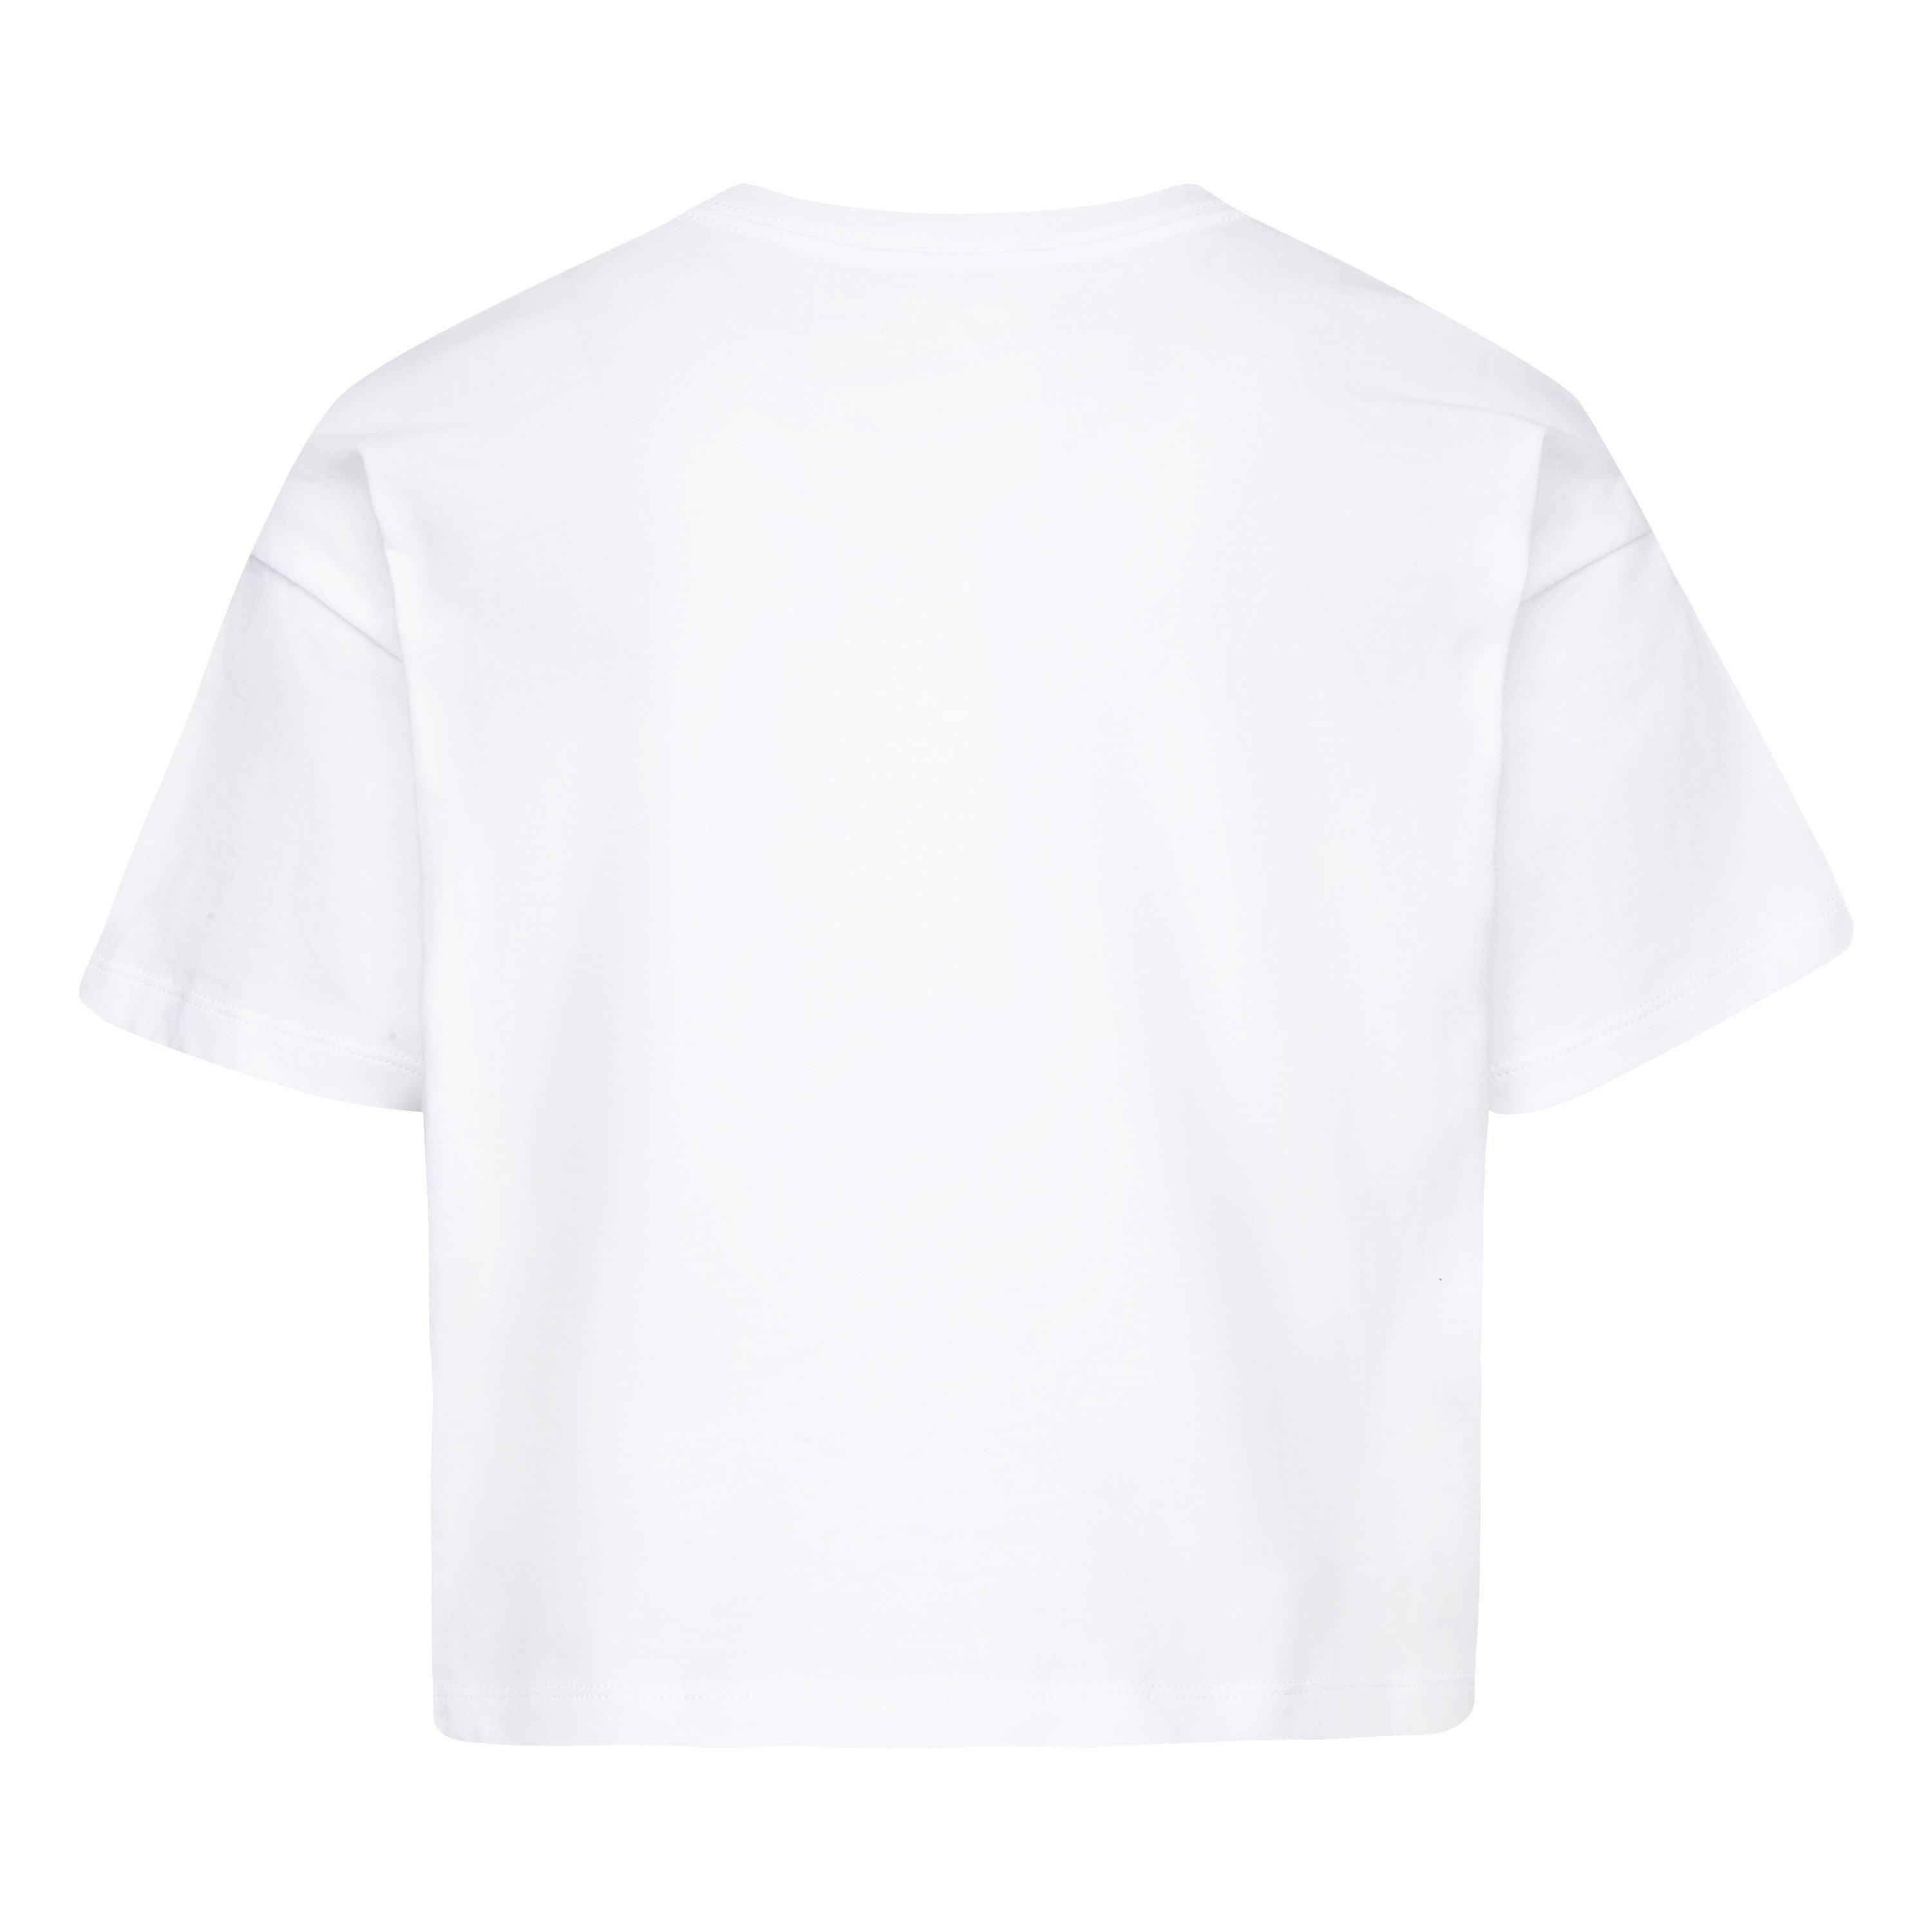 Jordan Girls Outside The Lines T-Shirt - White Size M